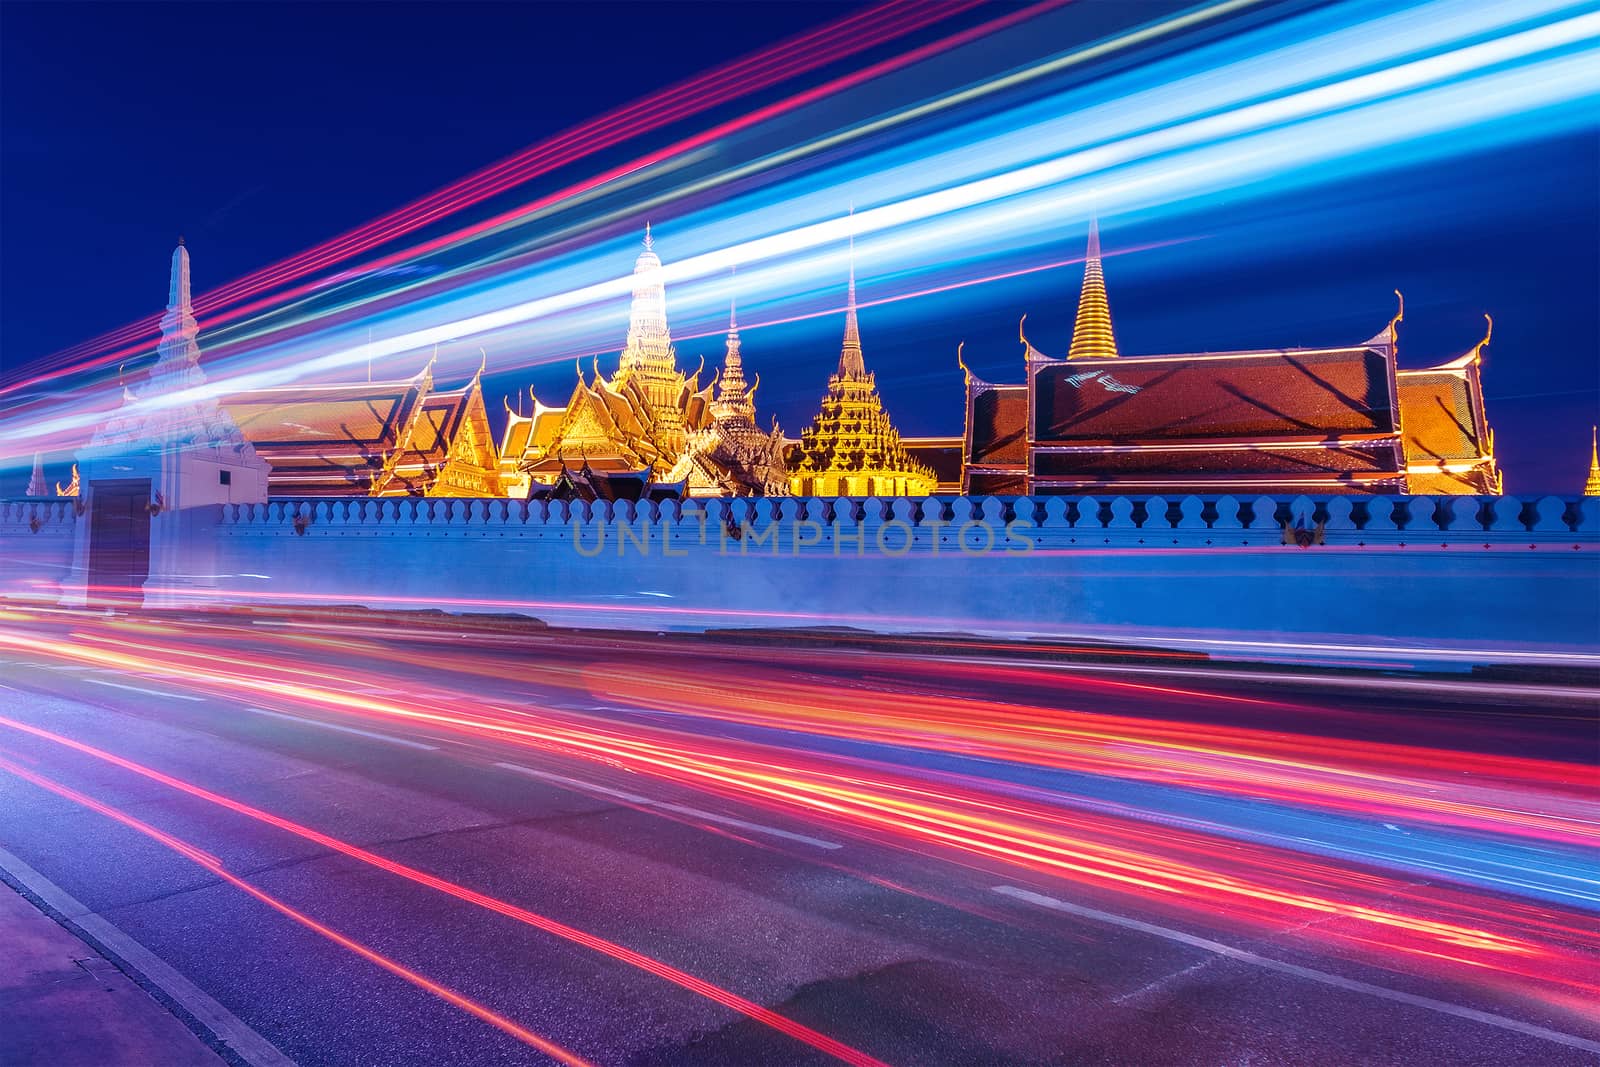 Wat Phra Kaew (The Emerald Buddha) night view in Thailand by Surasak